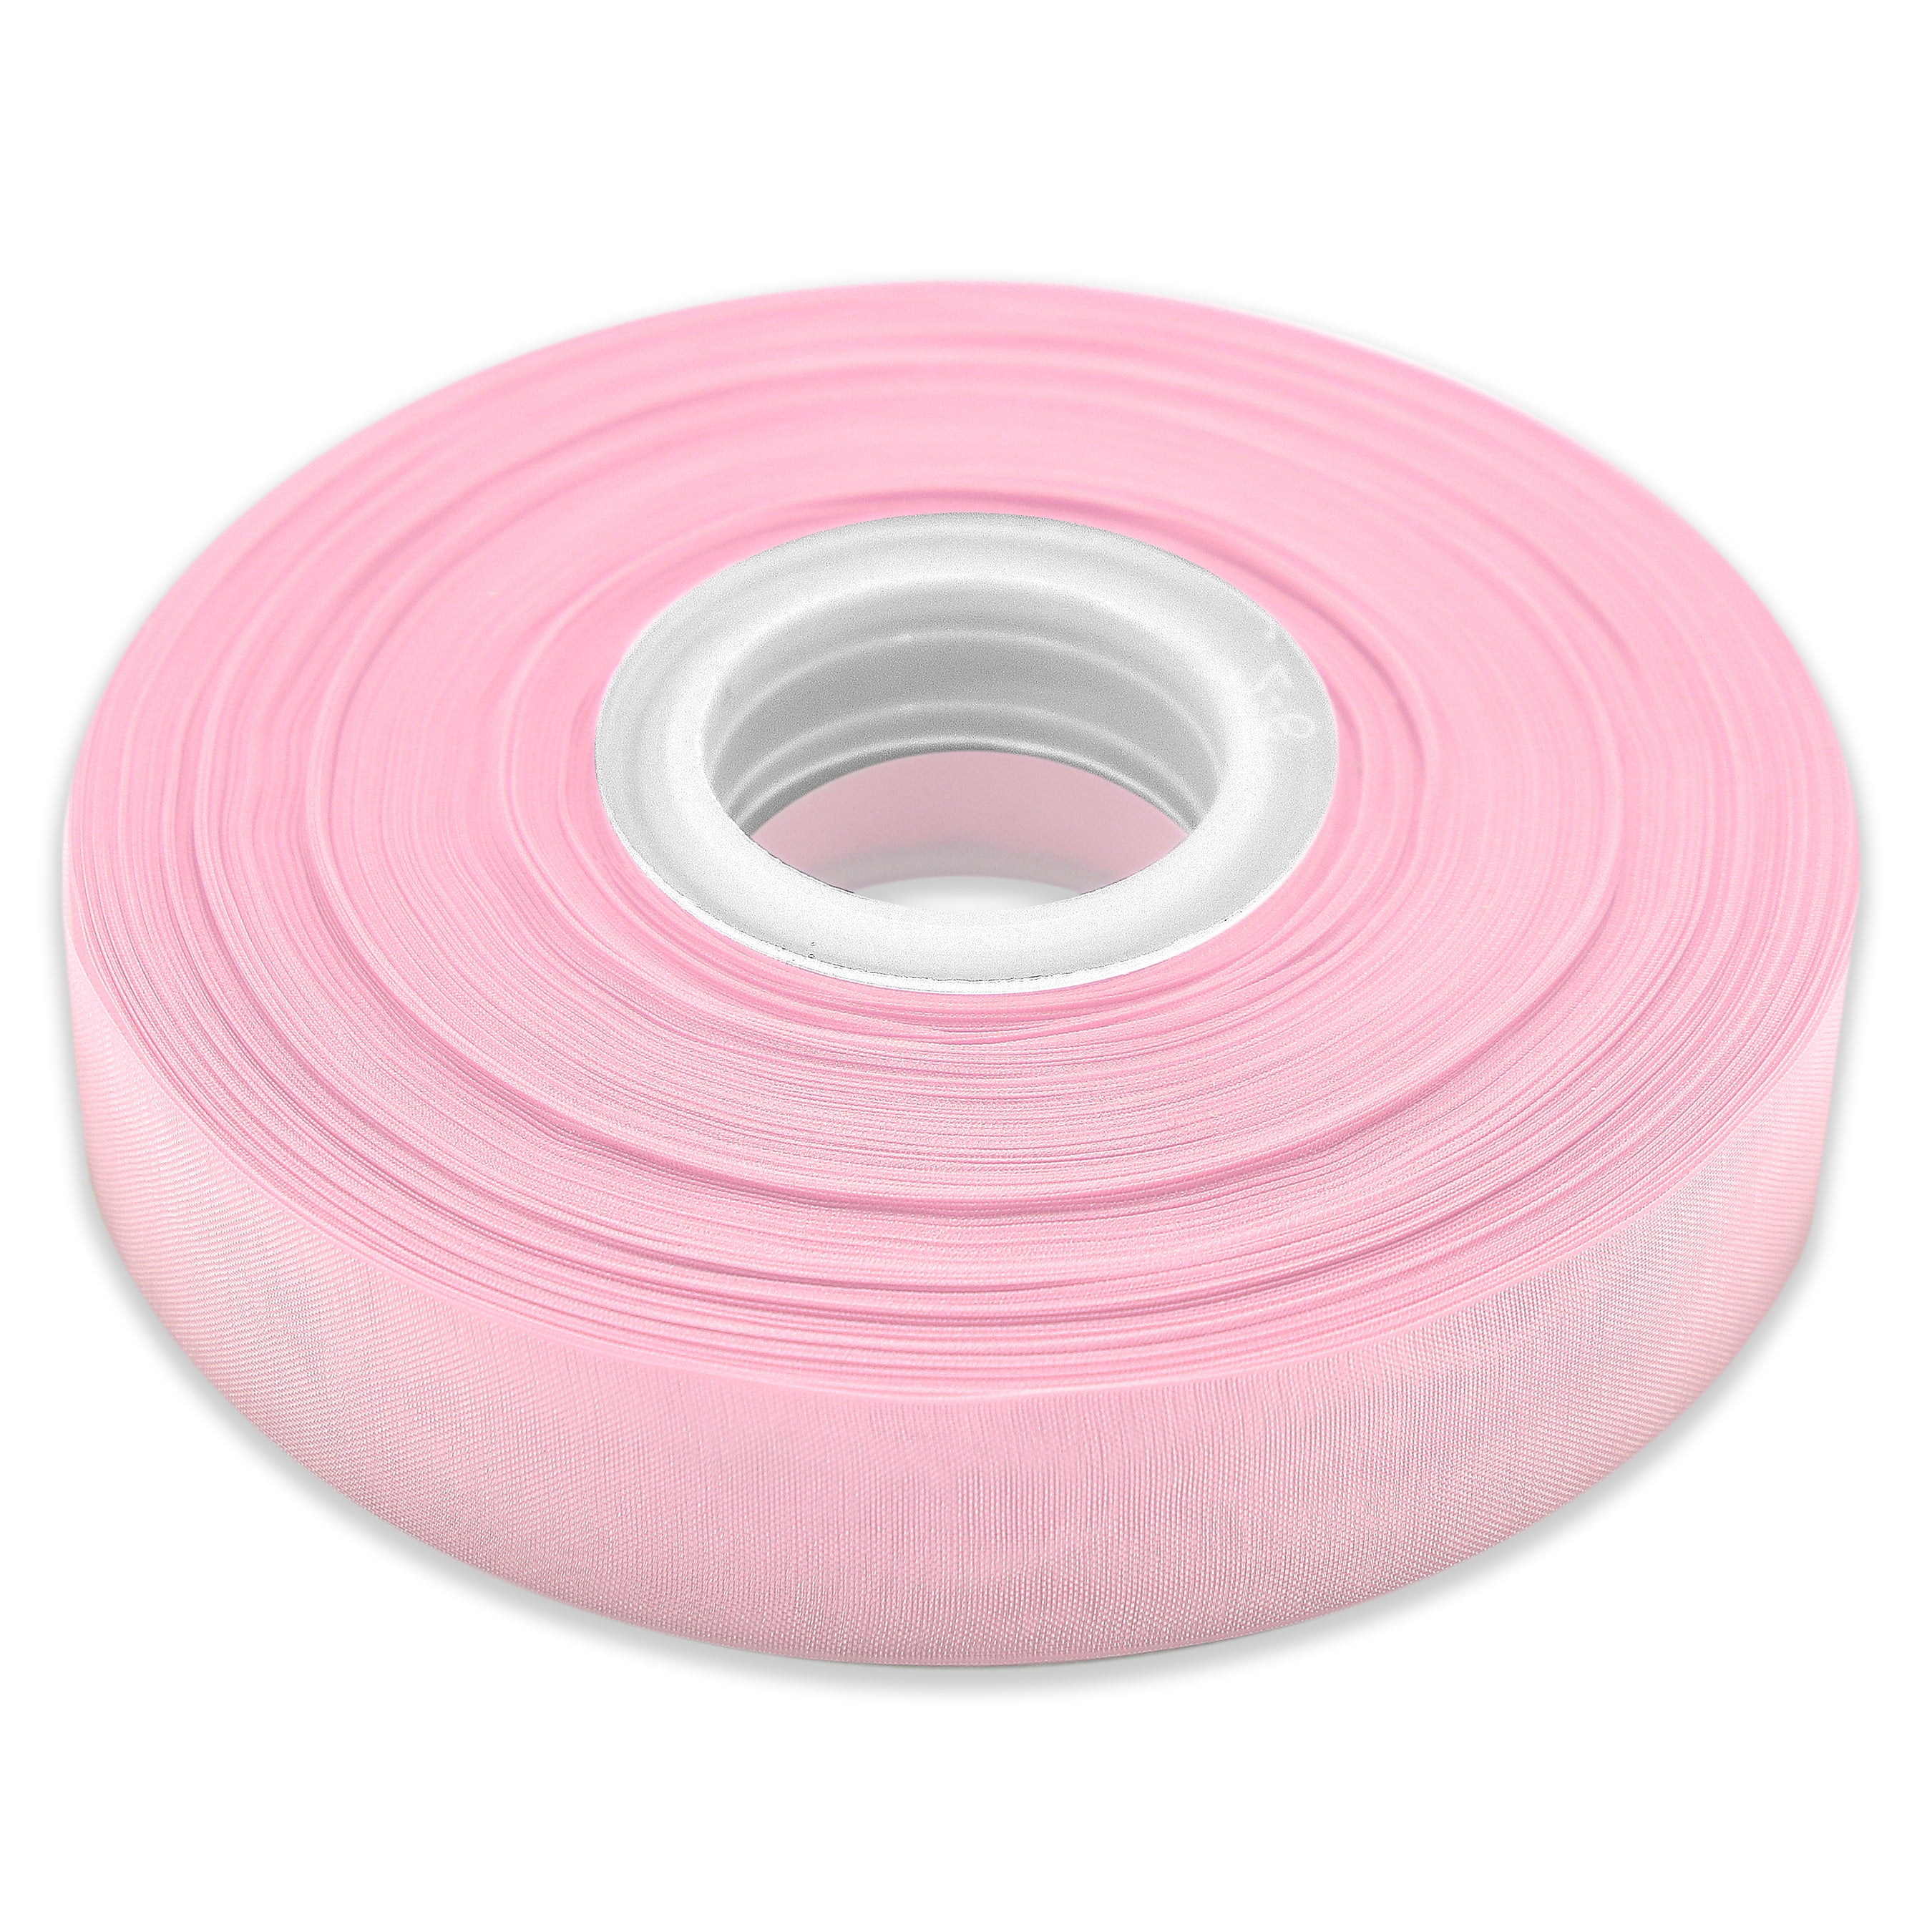 Vaessen Creative Organza Ribbon 6 Colours 6mmx2m Baby Pink